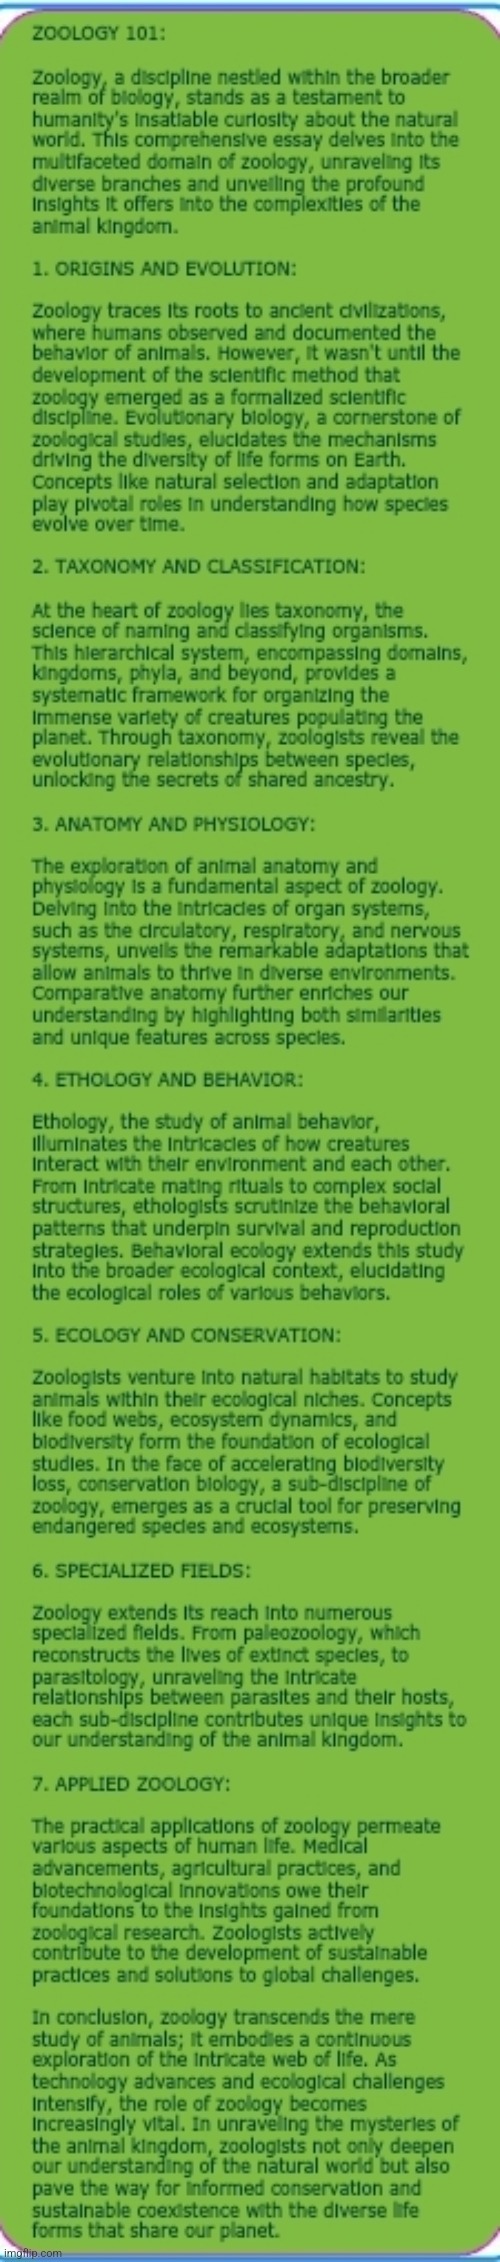 Zoology 101 :> | image tagged in simothefinlandized,zoology,infographic,essay | made w/ Imgflip meme maker